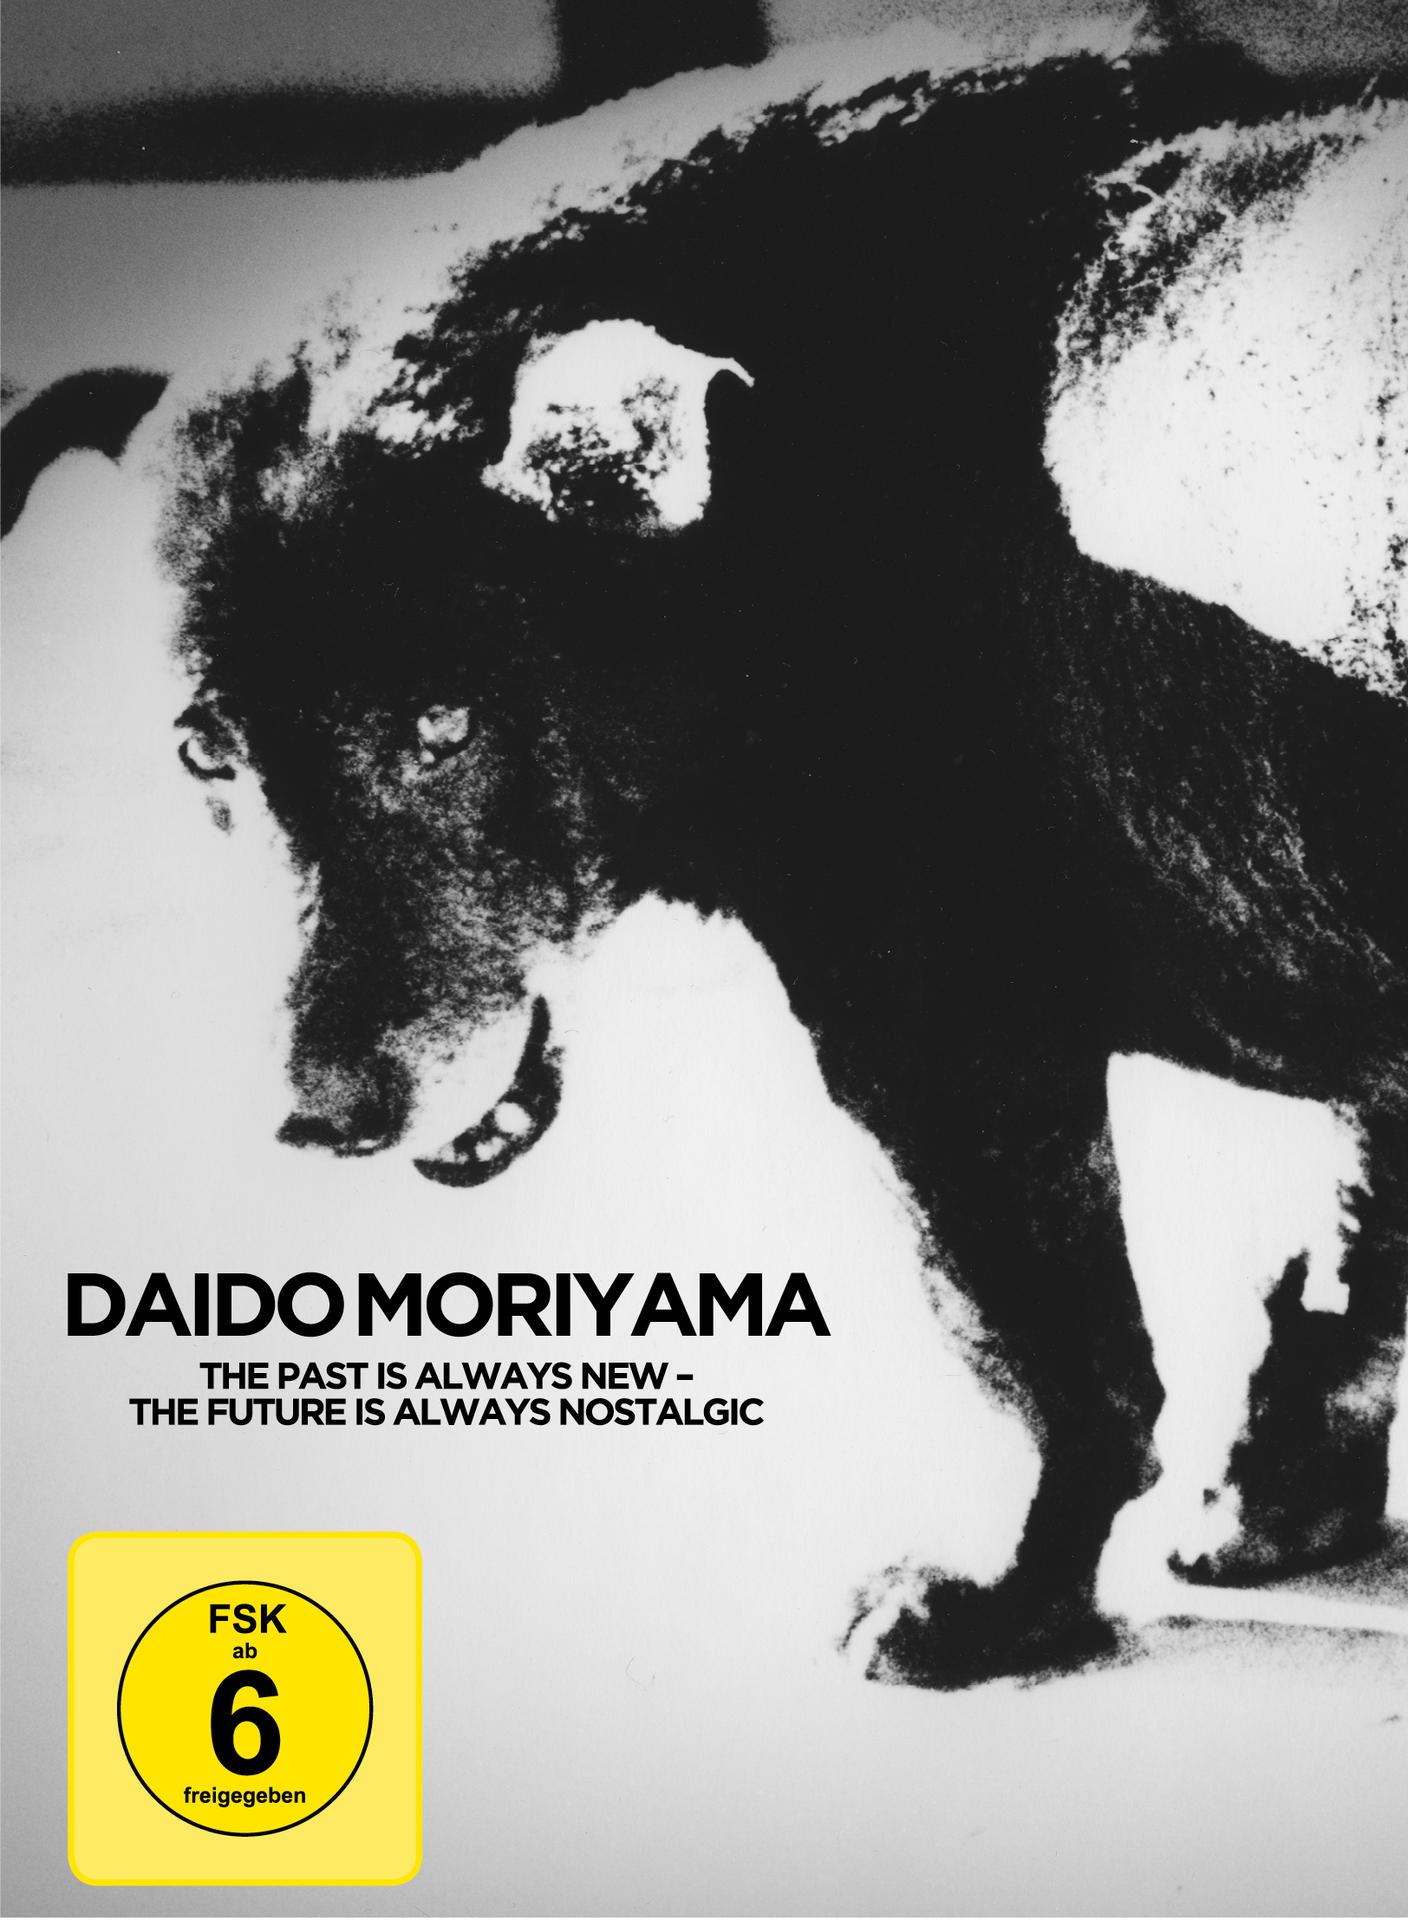 The DVD new, always nostalgic Past the - is Daido always Future is Moriyama